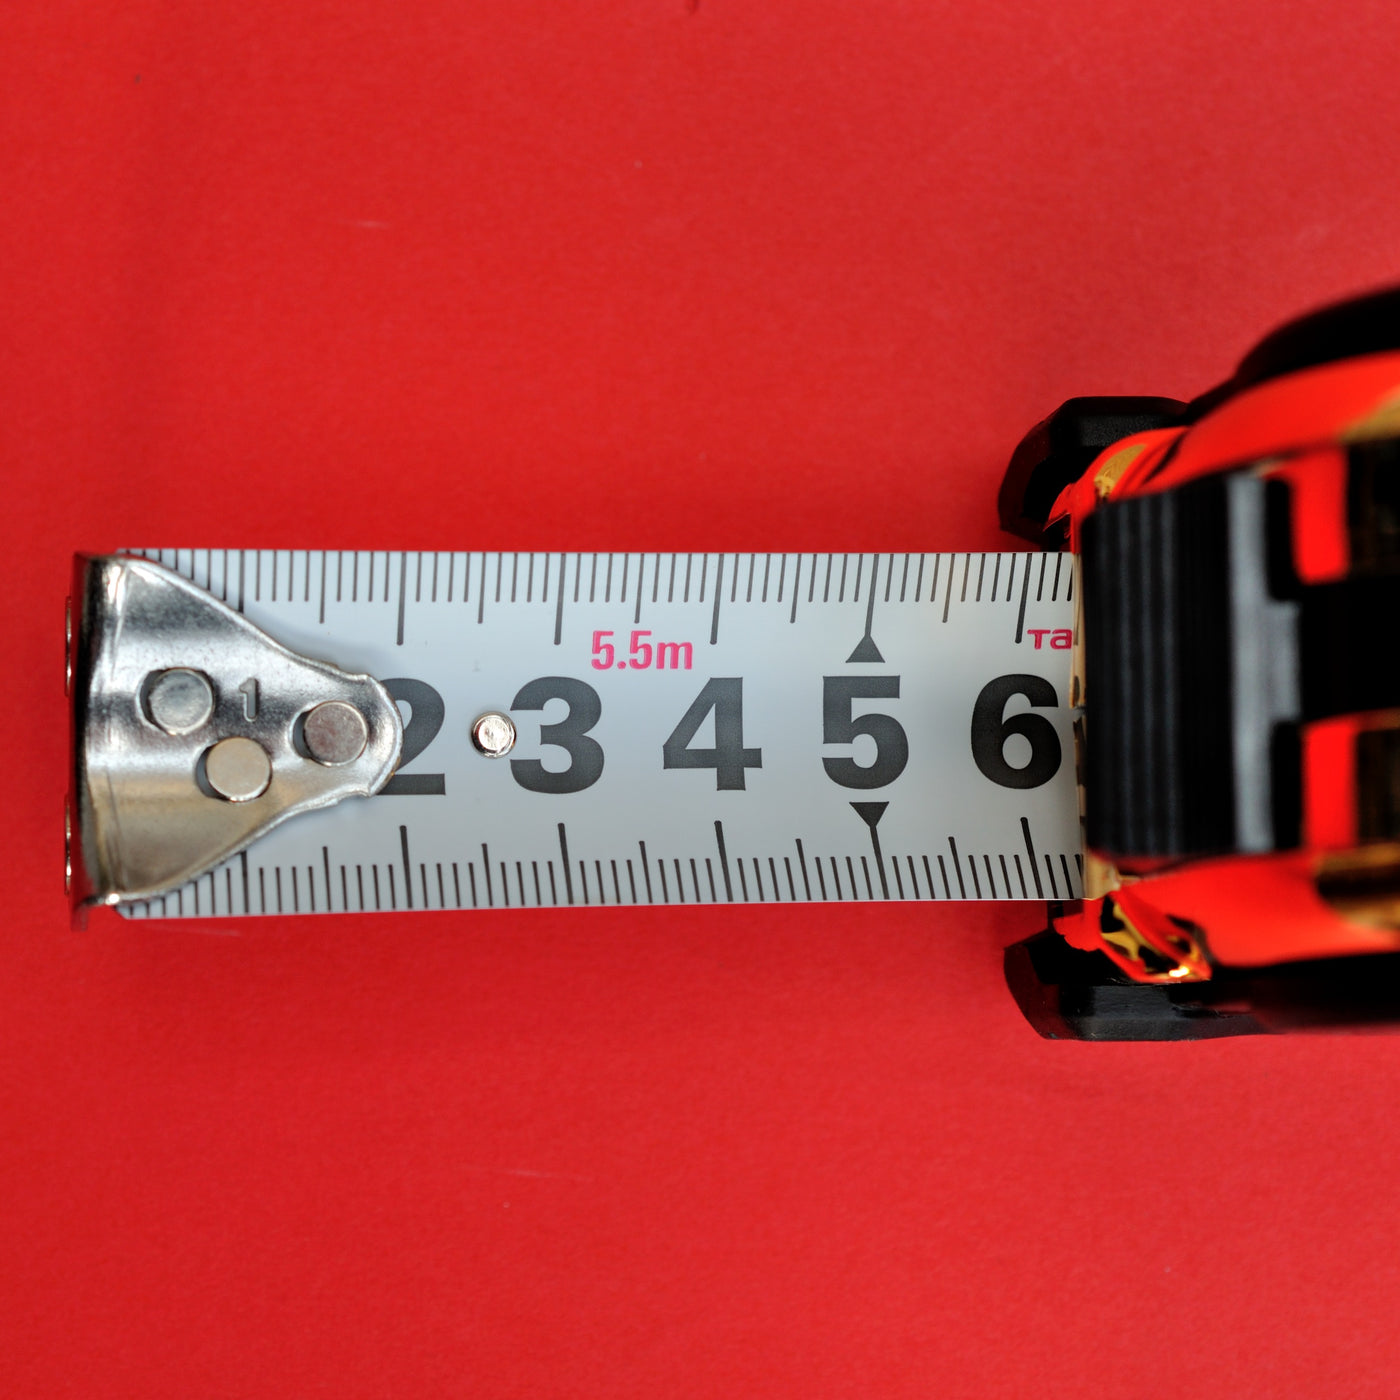 Tajima Measuring Tape, Red, 5m x 25 mm - PowerToolMate